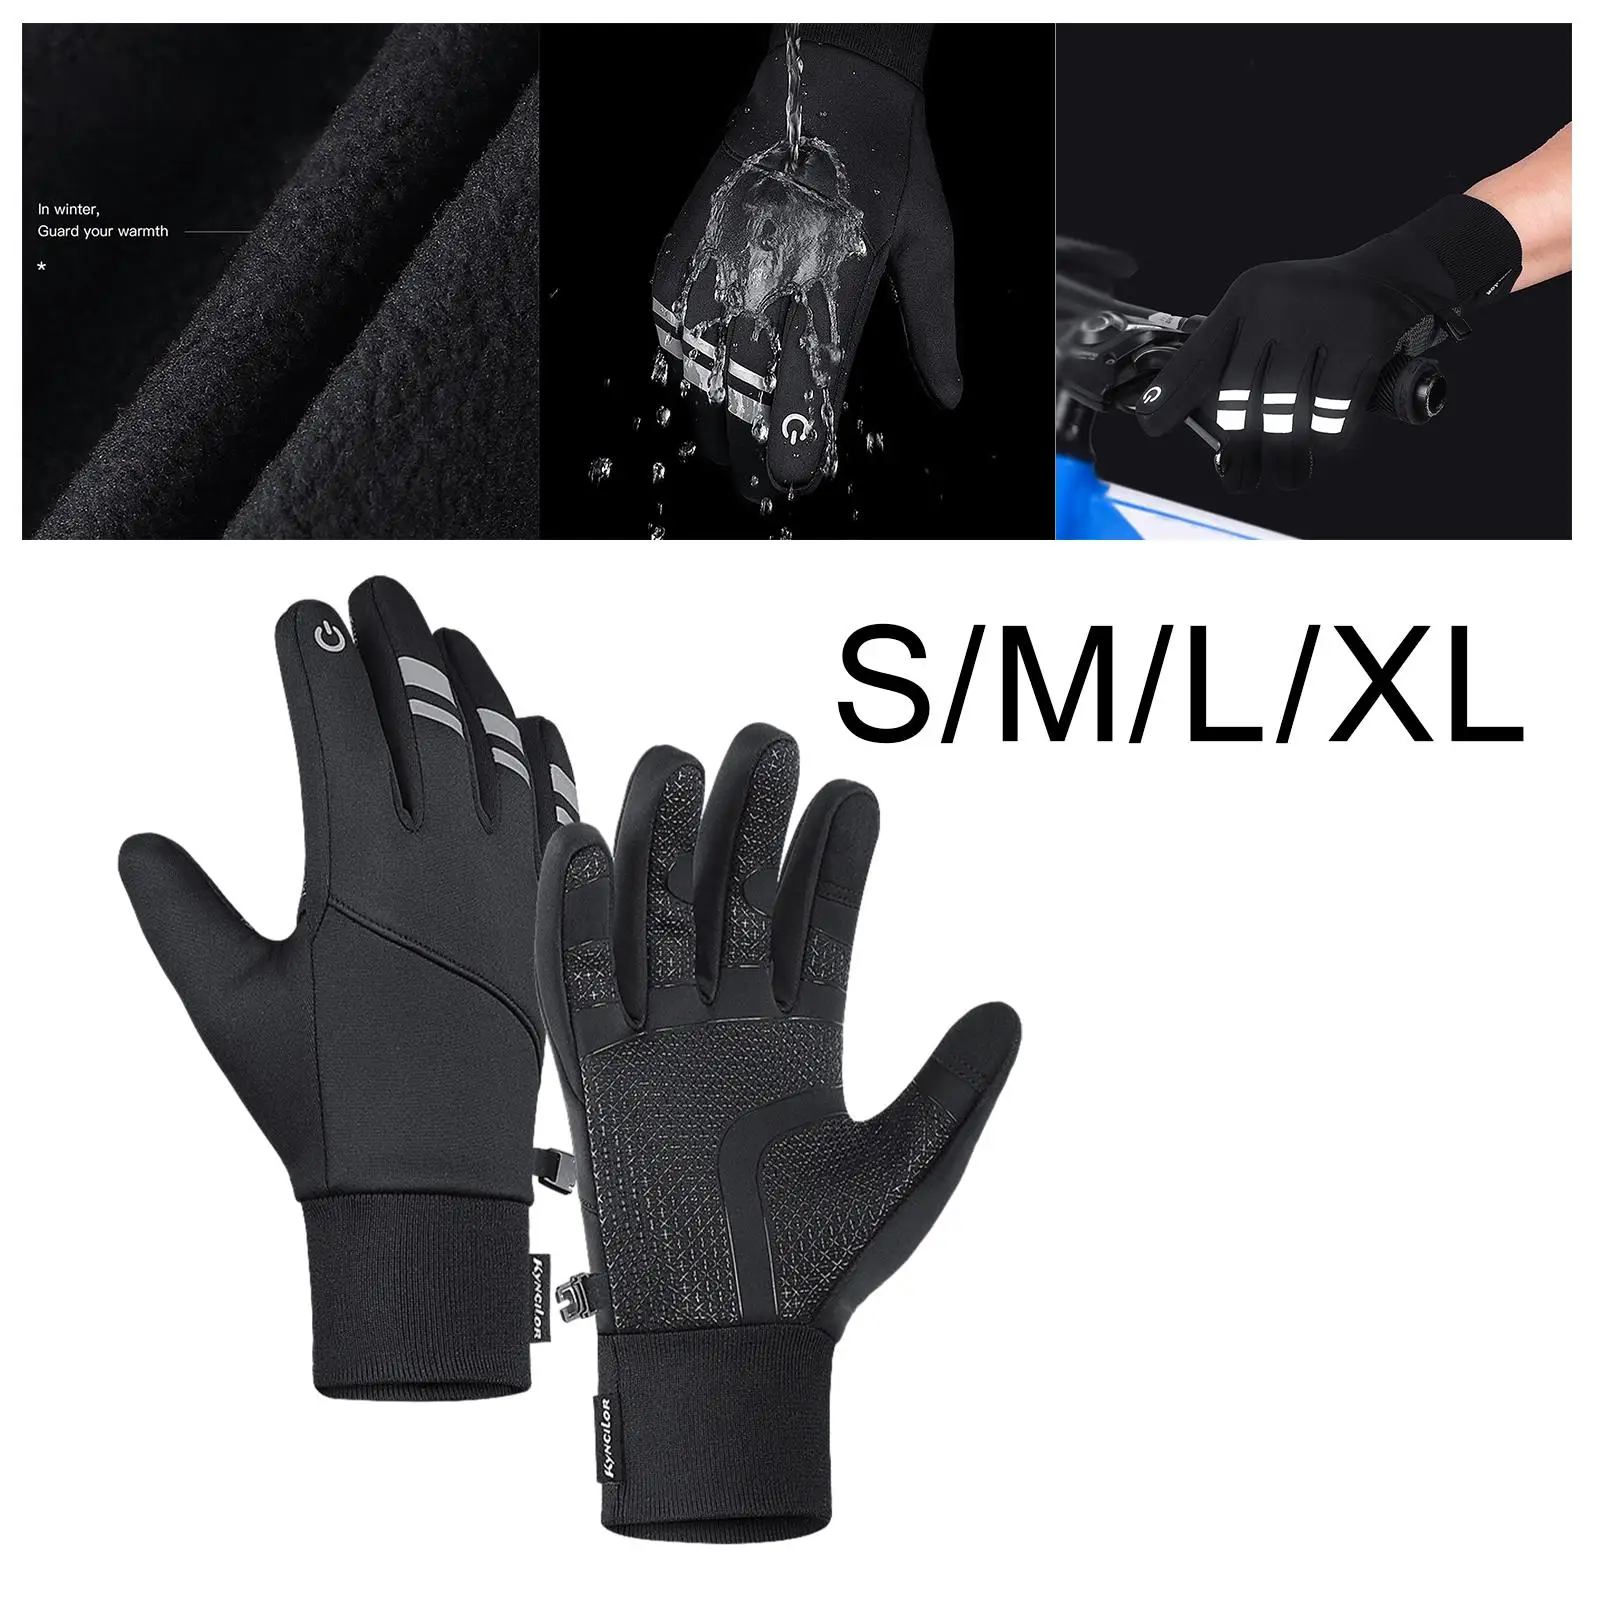 Winter Ski Gloves Touchscreen Waterproof AntiSlip Cycling Gloves Warm Mittens for Running Outdoor Sports Biking Driving Skating